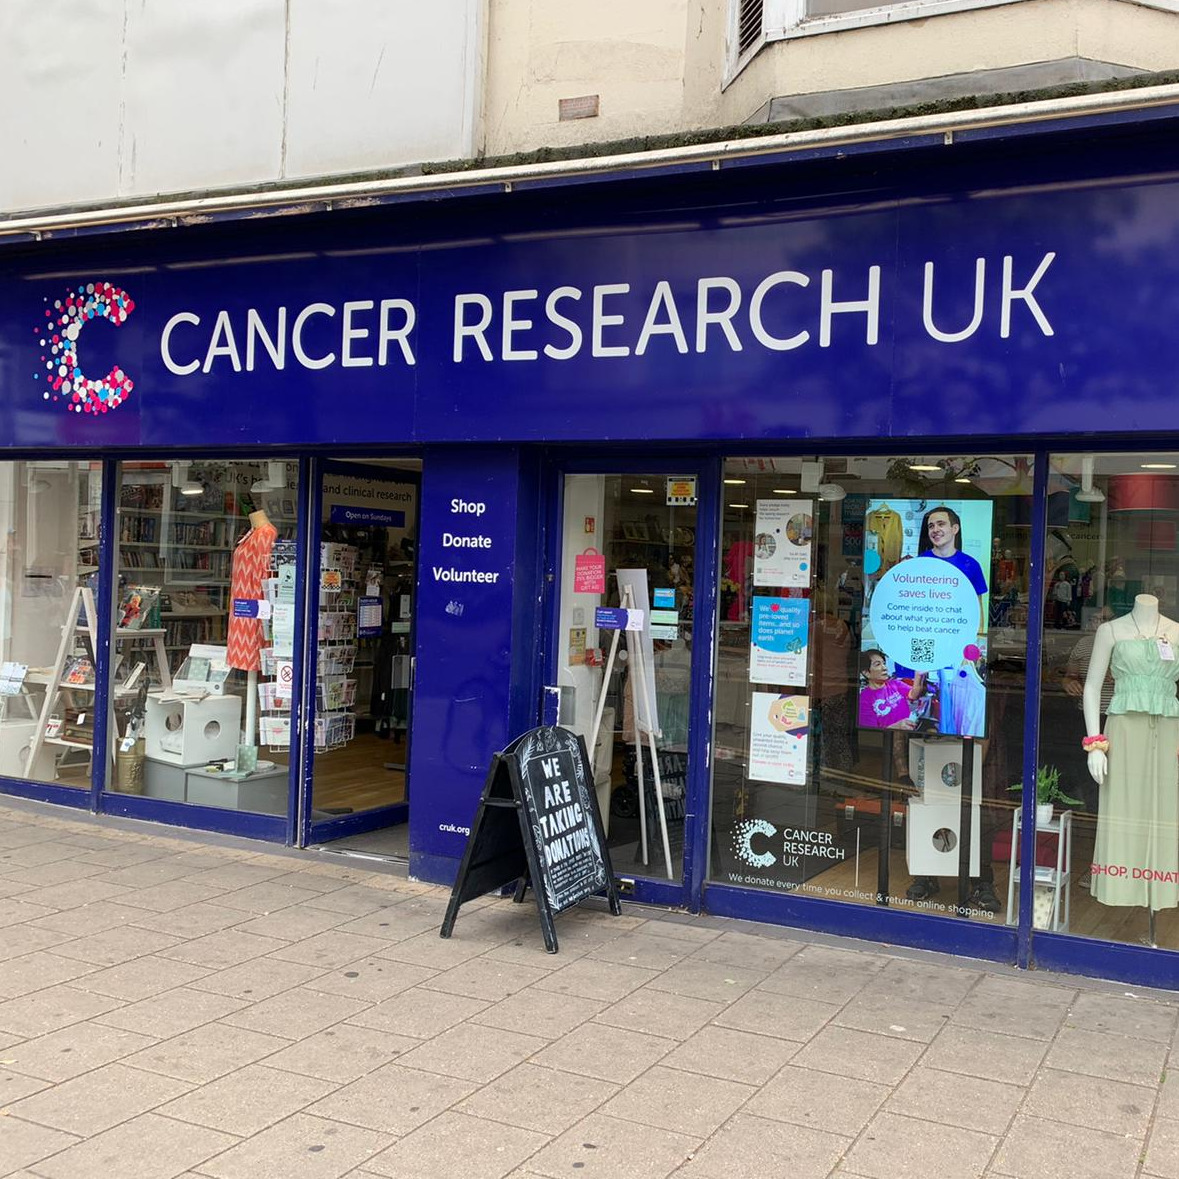 cancer research UK screen in shop window advertising volunteering